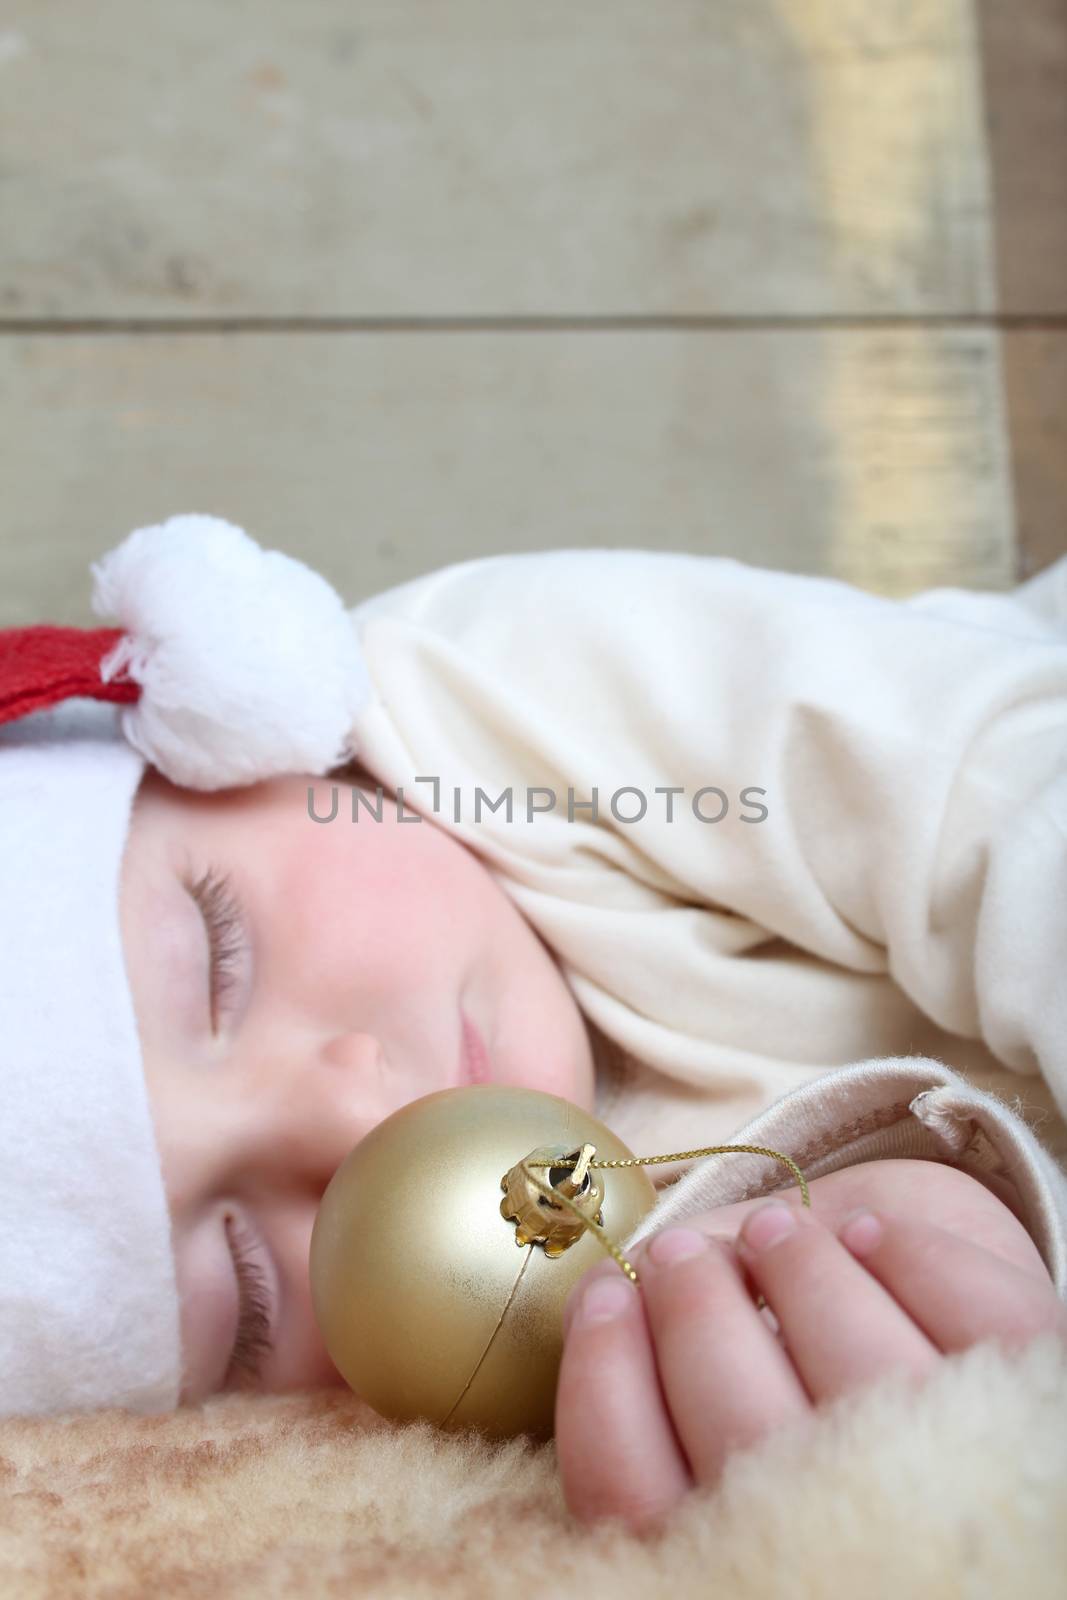 Sleeping christmas baby on a sheep skin rug wearing 